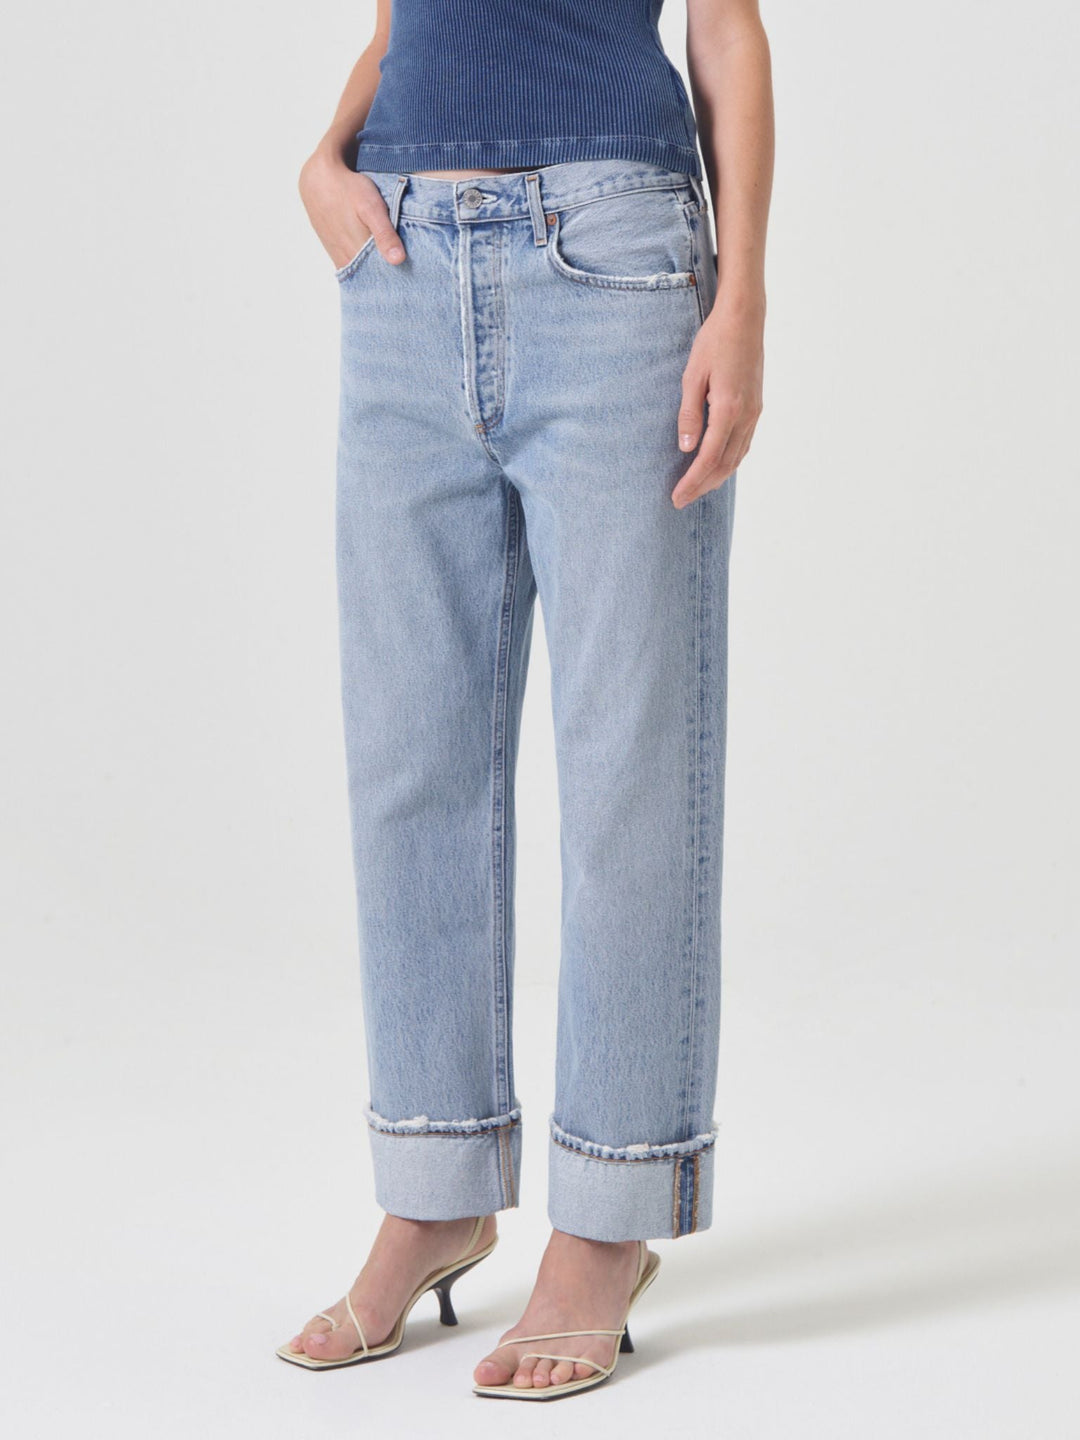 AGOLDE Fran Force Cuff StraightDenim jeans